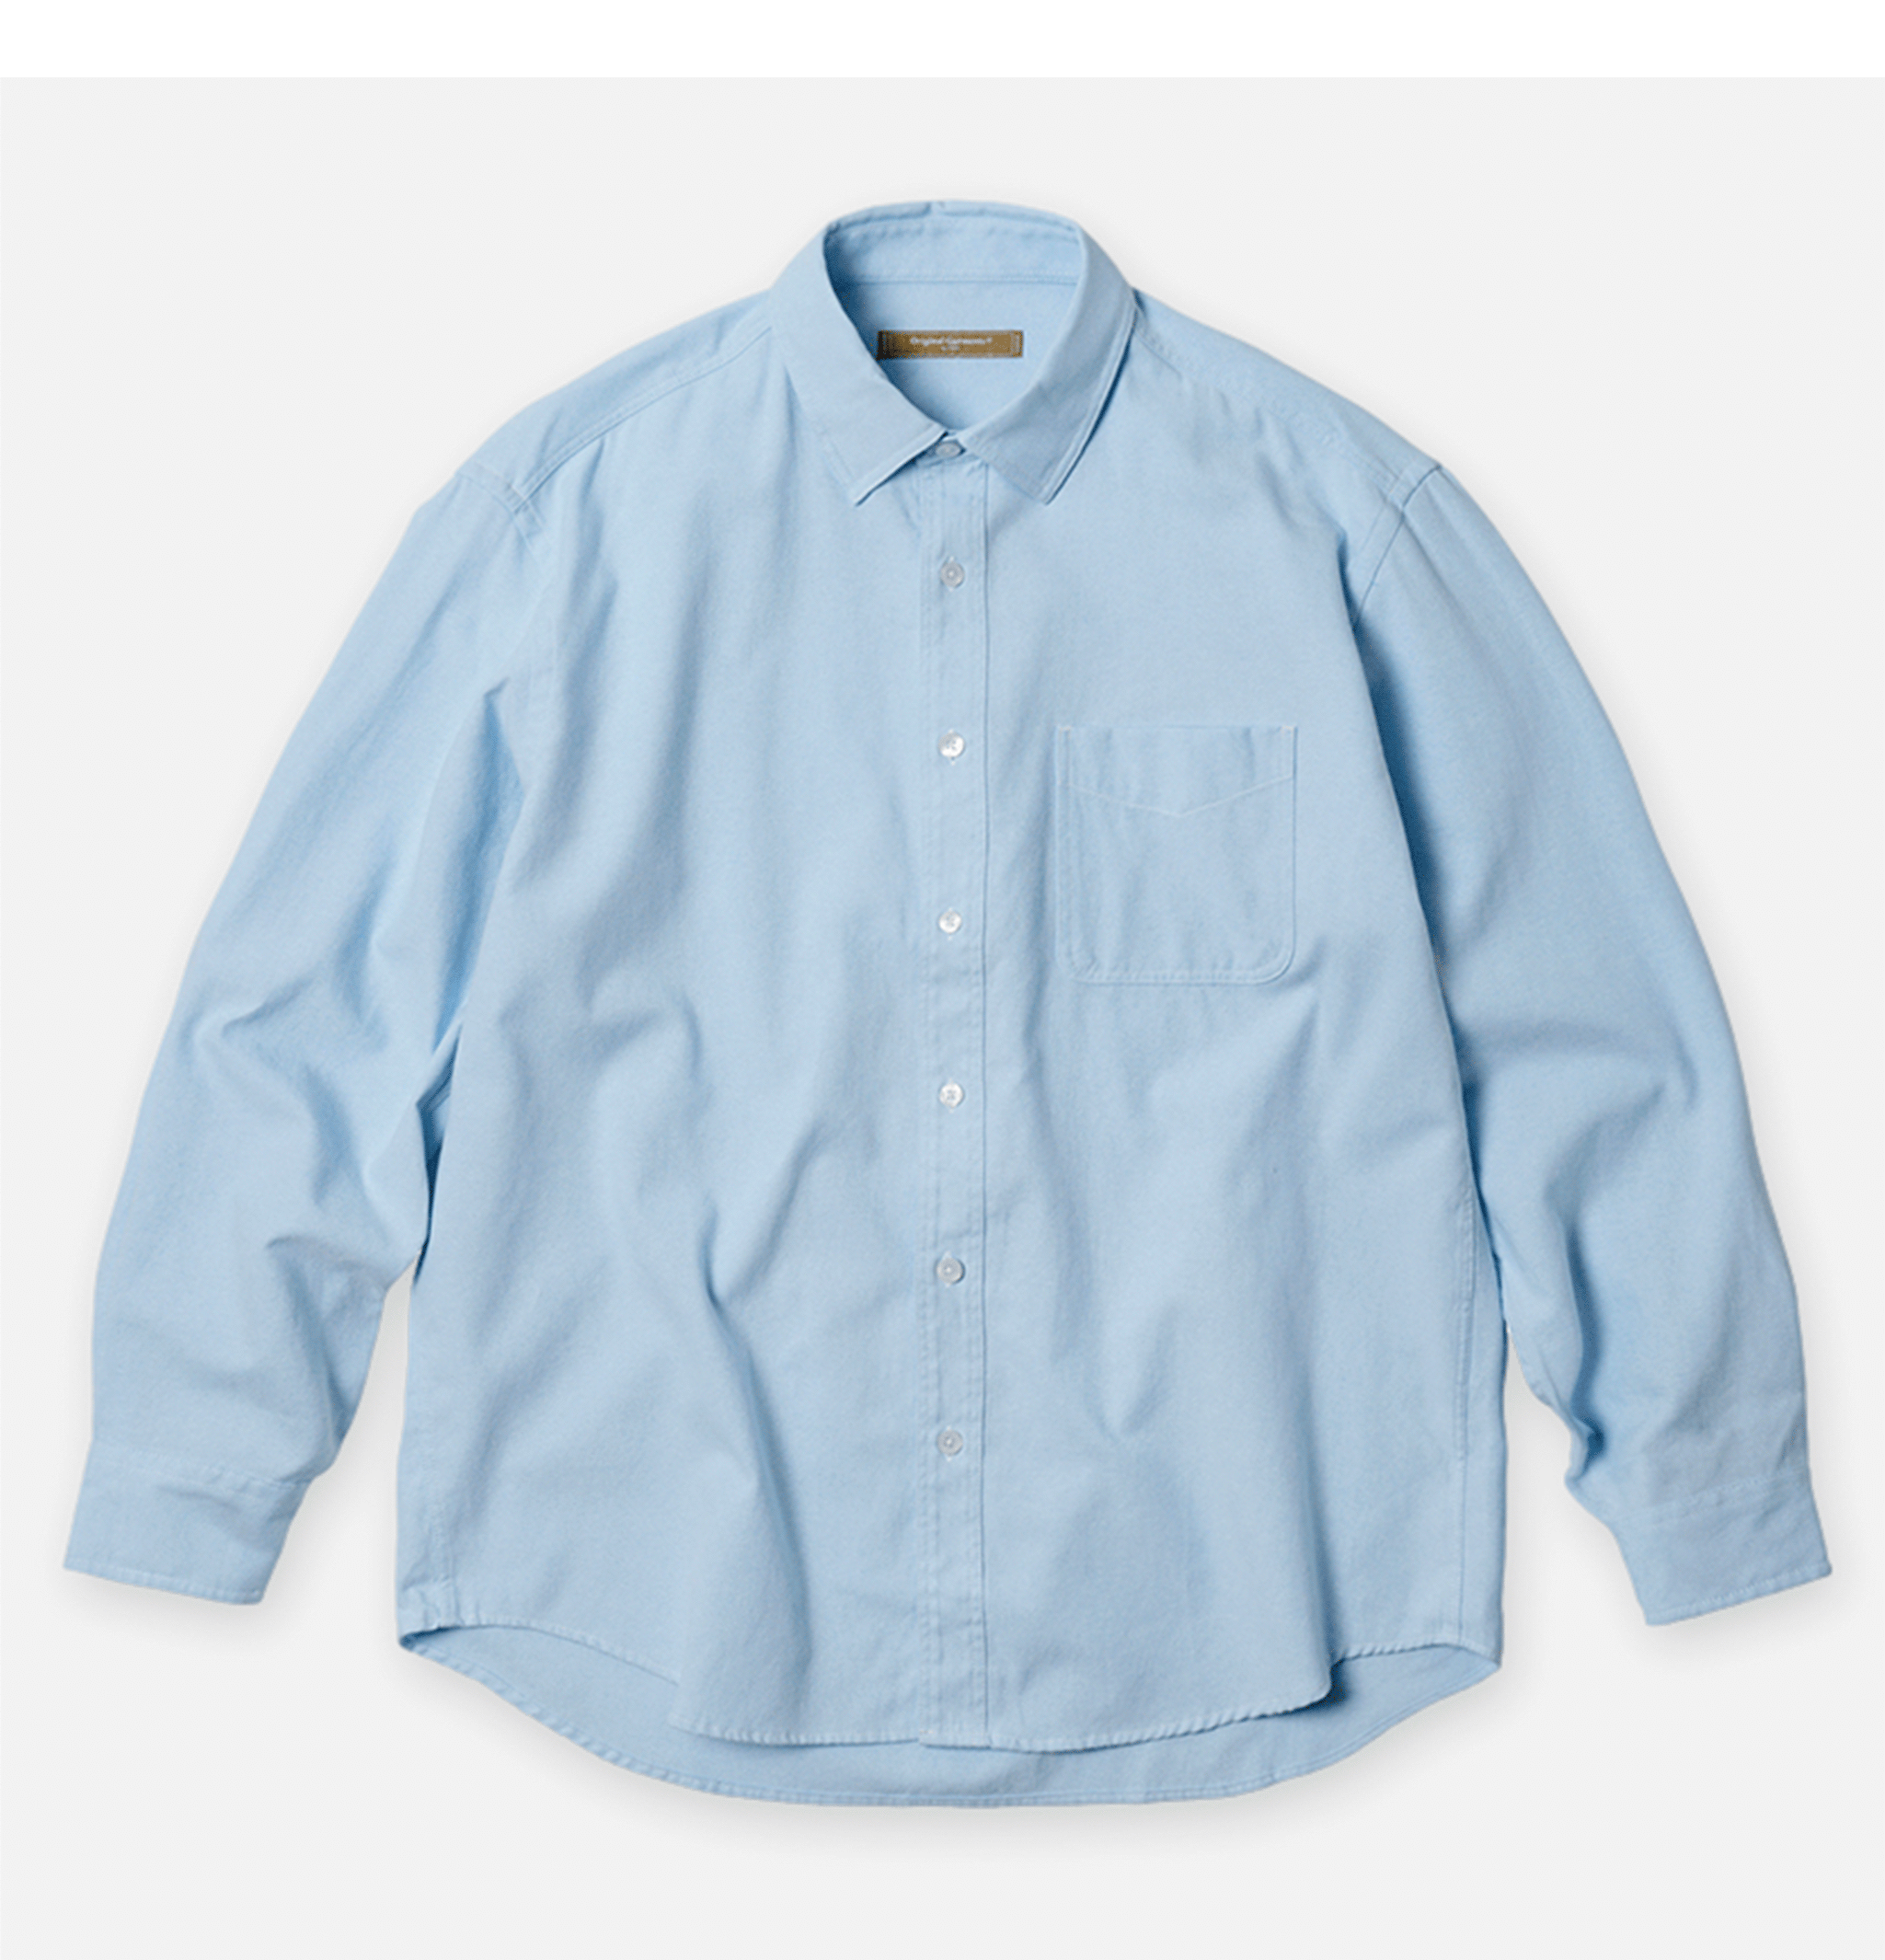 Oxford Shirt Blue